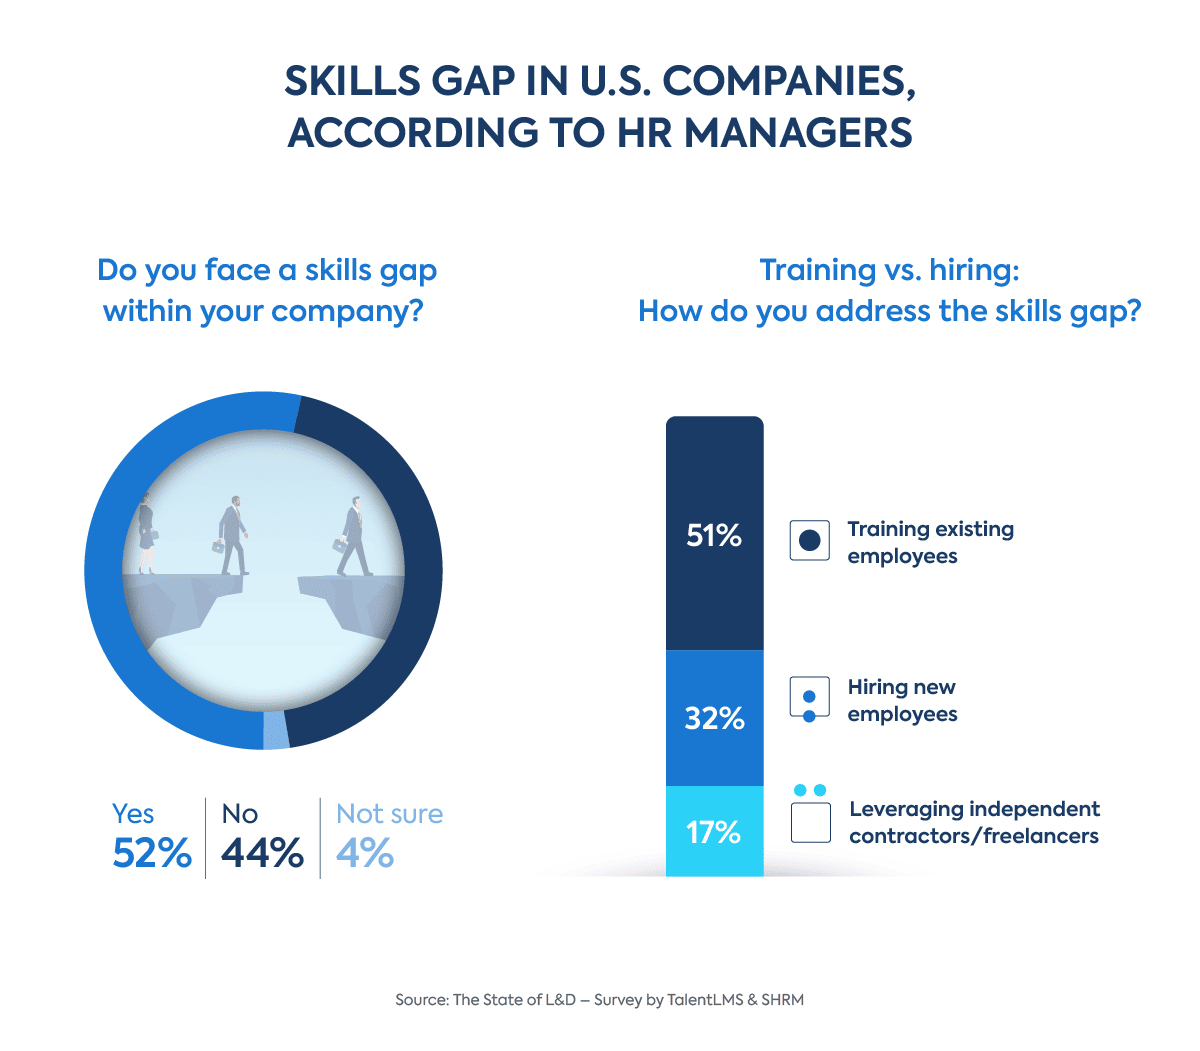 Skills gap in U.S. companies: How many address it with training and development